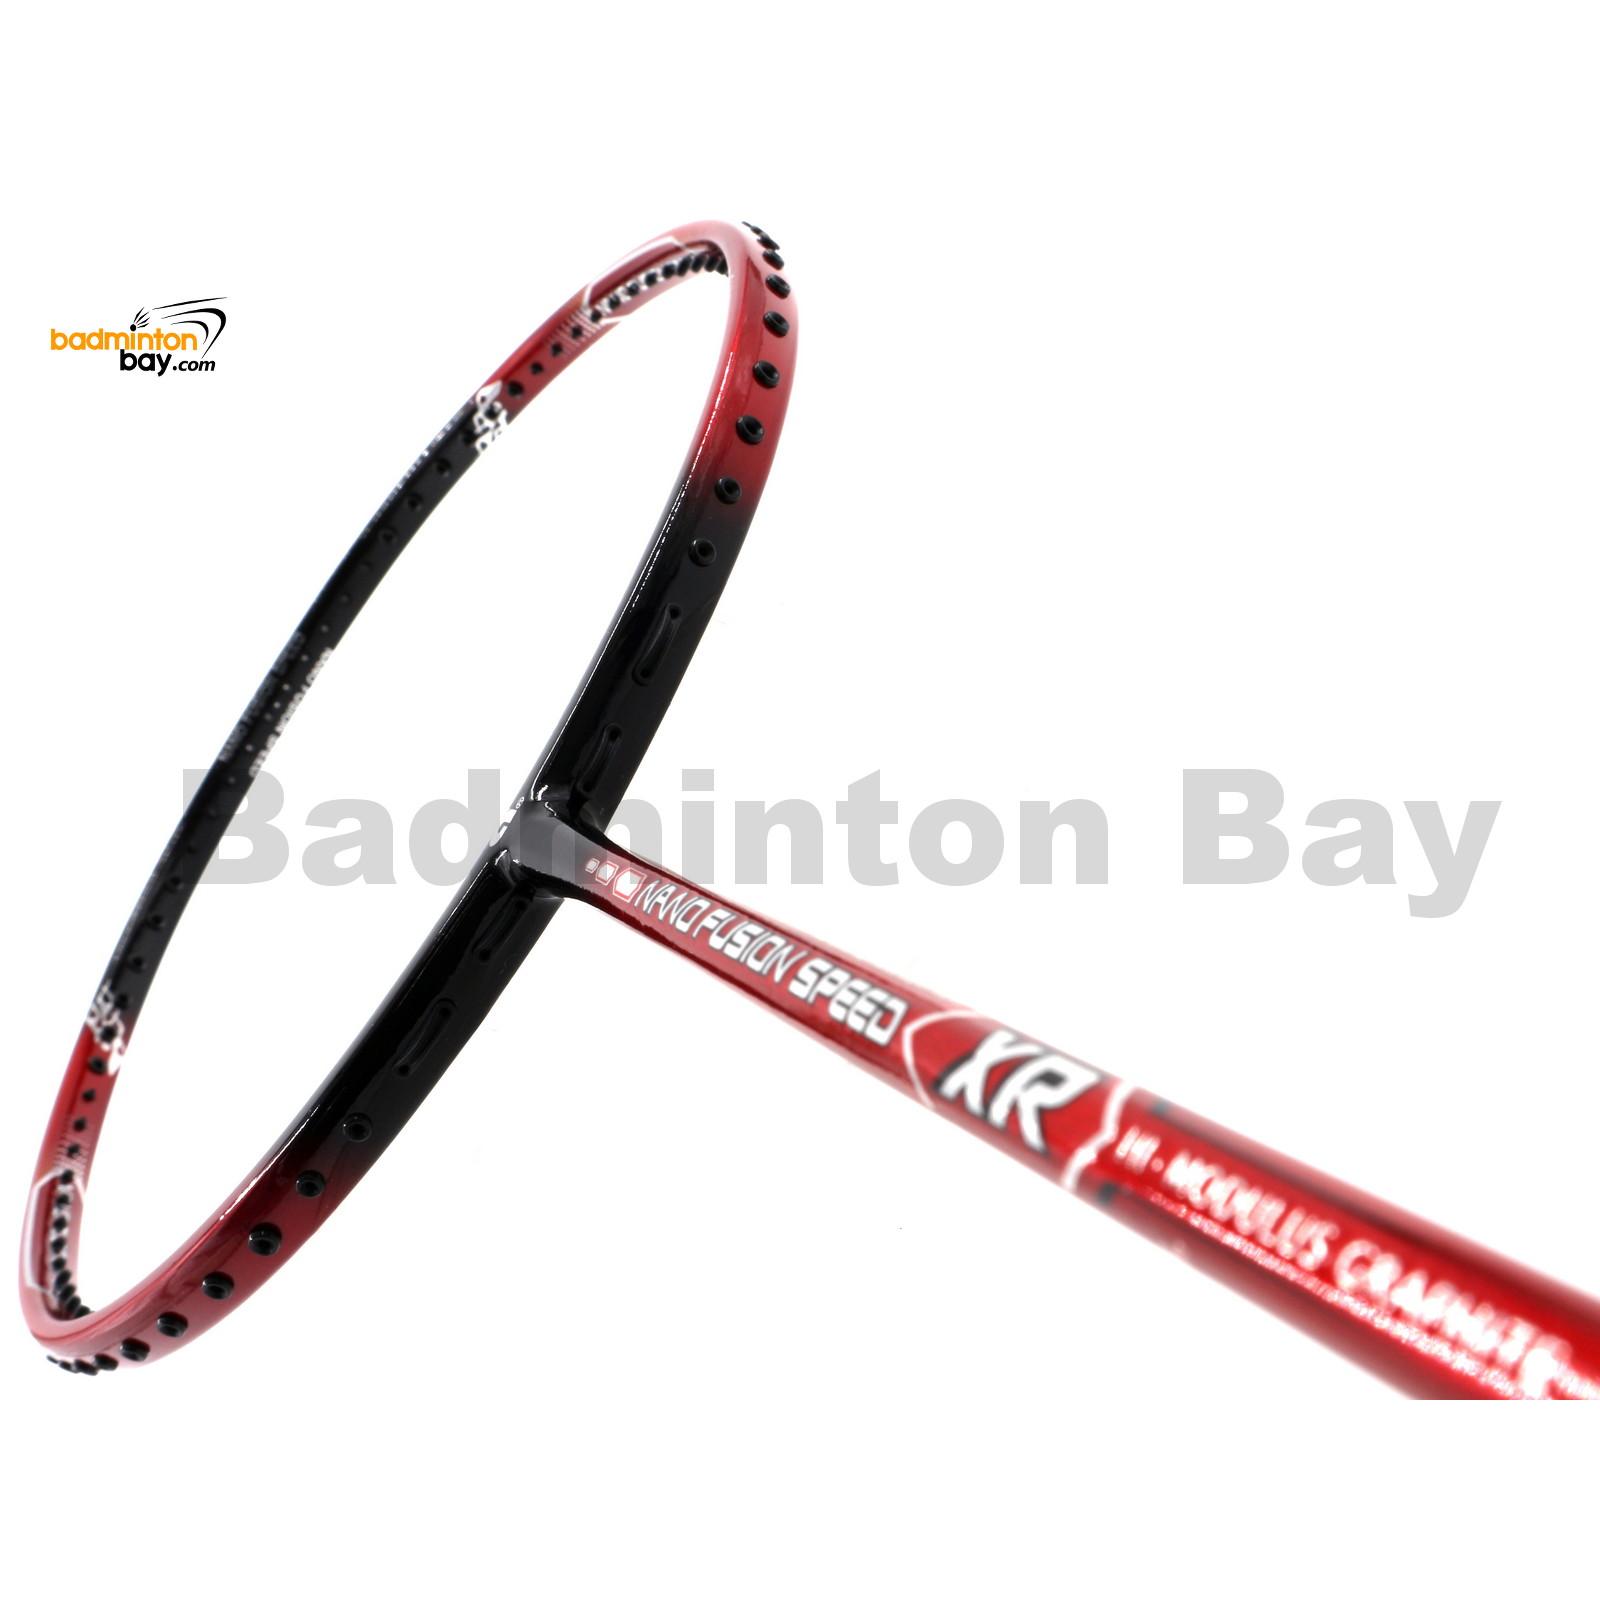 2 Pieces Deal Apacs Nano Fusion Speed XR Black Red + Apacs Edgesaber Z Slayer Badminton